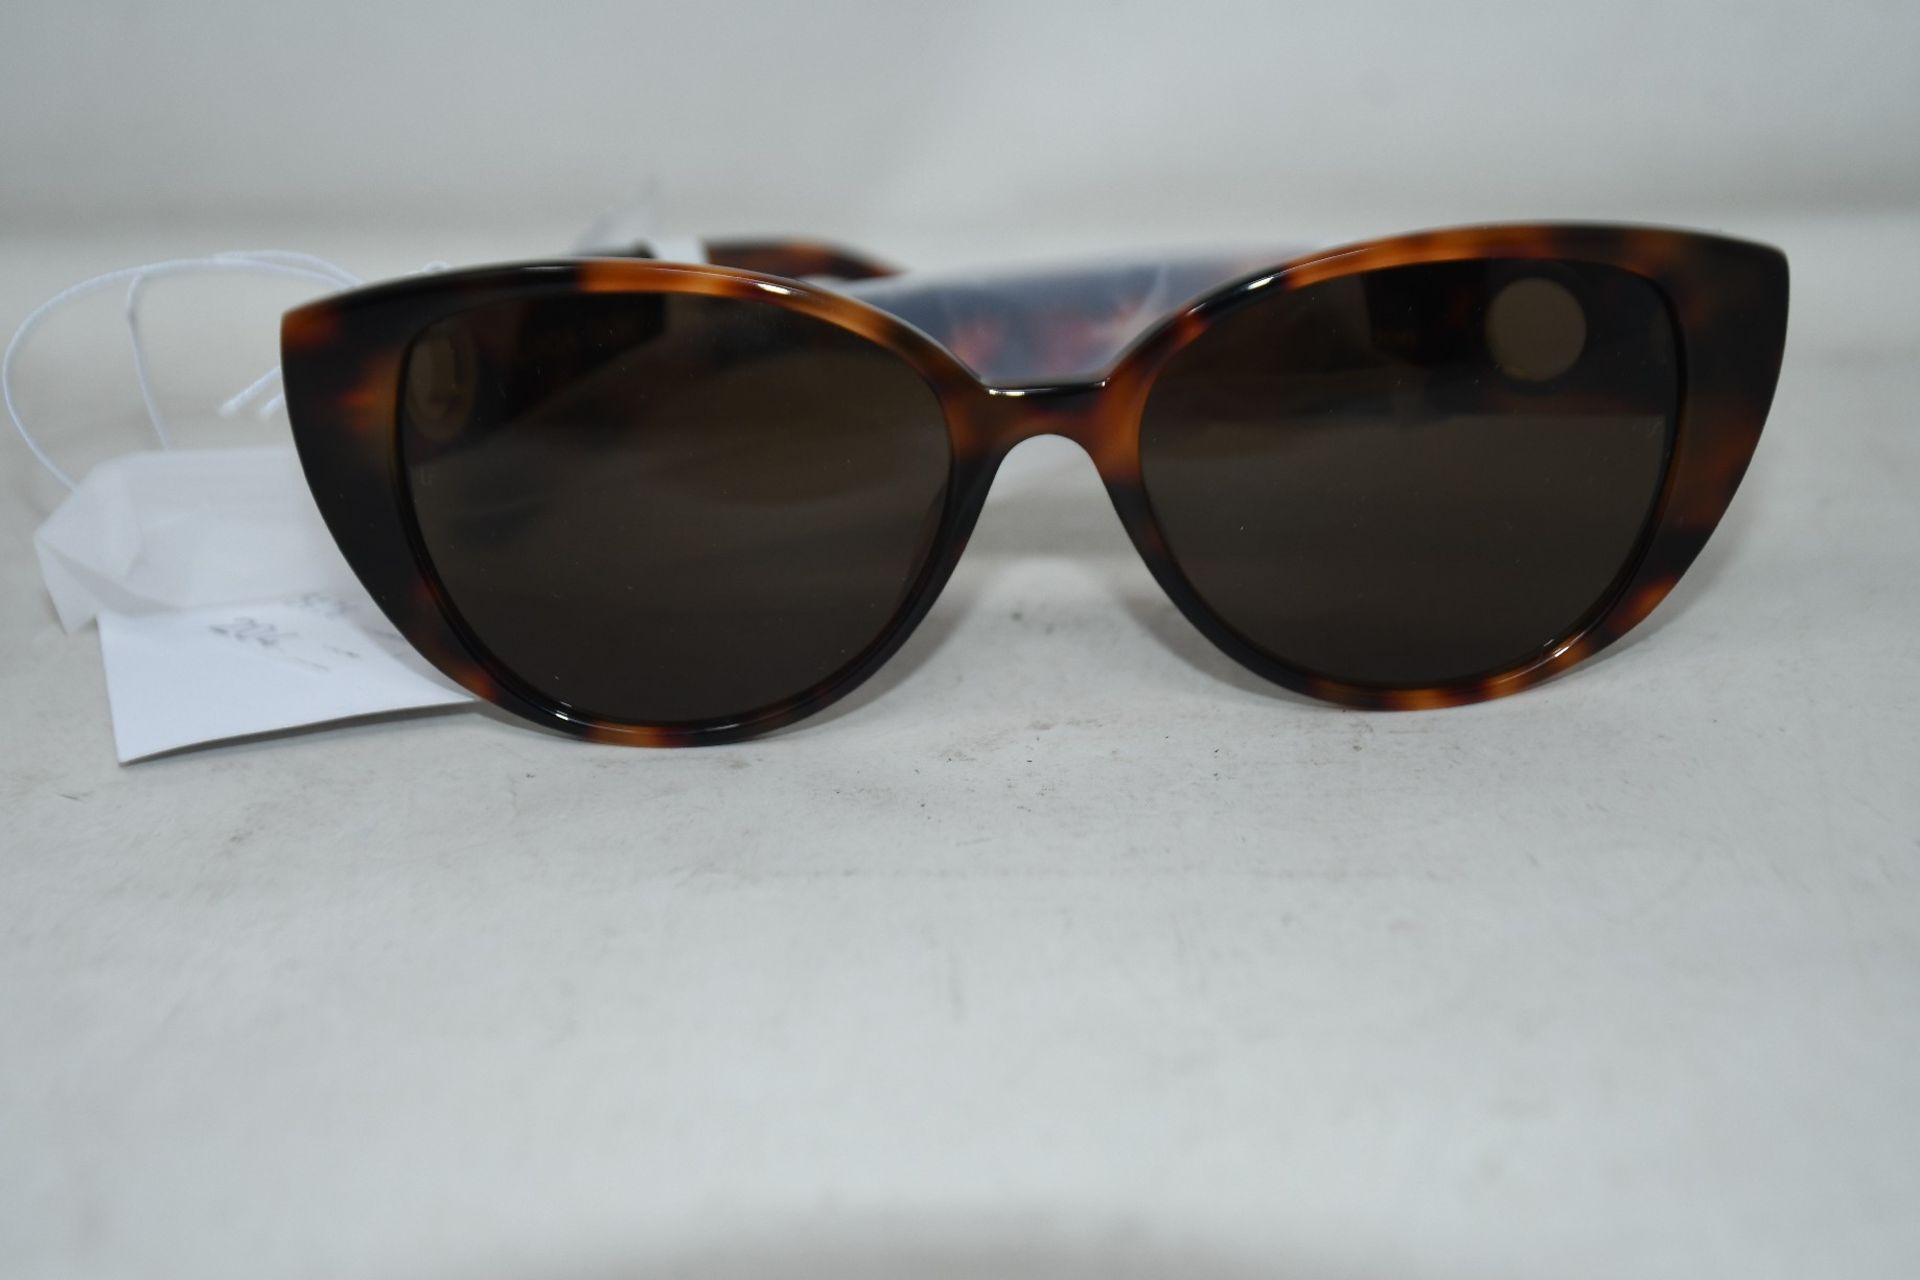 A pair of as new Linda Farrow Amber sunglasses (RRP £395 - no case).